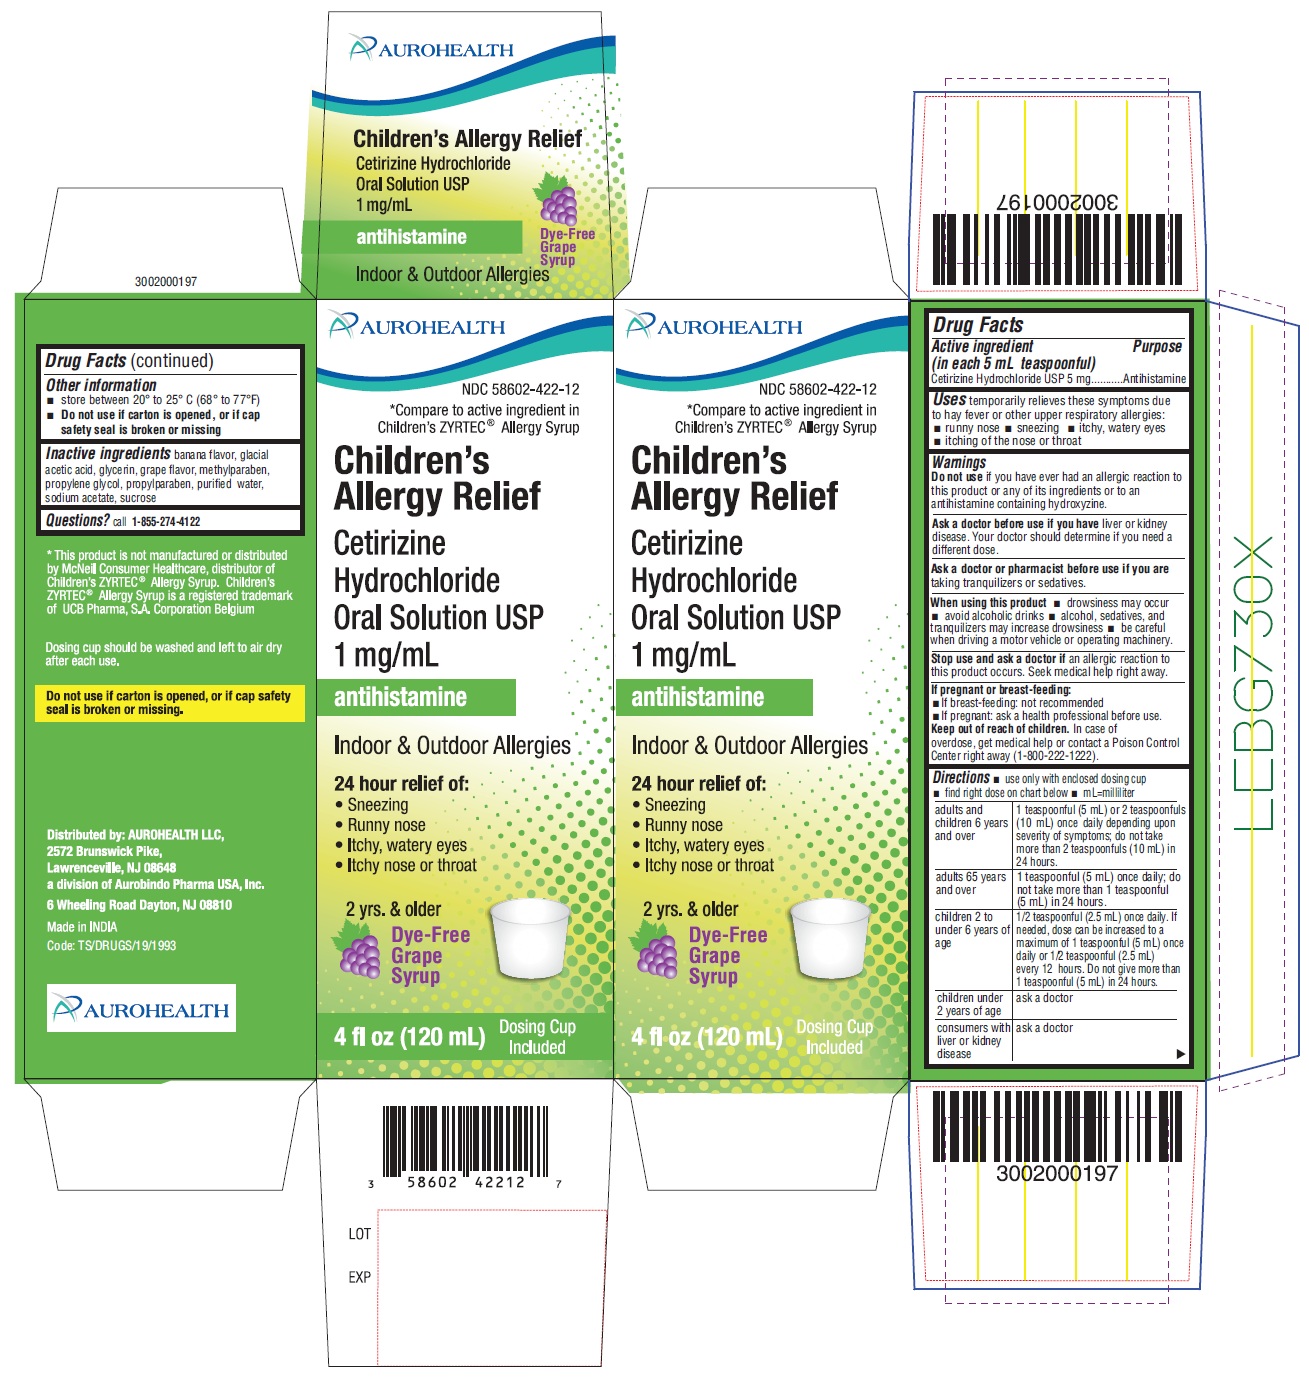 PACKAGE LABEL-PRINCIPAL DISPLAY PANEL - 1 mg/mL Carton (120 mL)